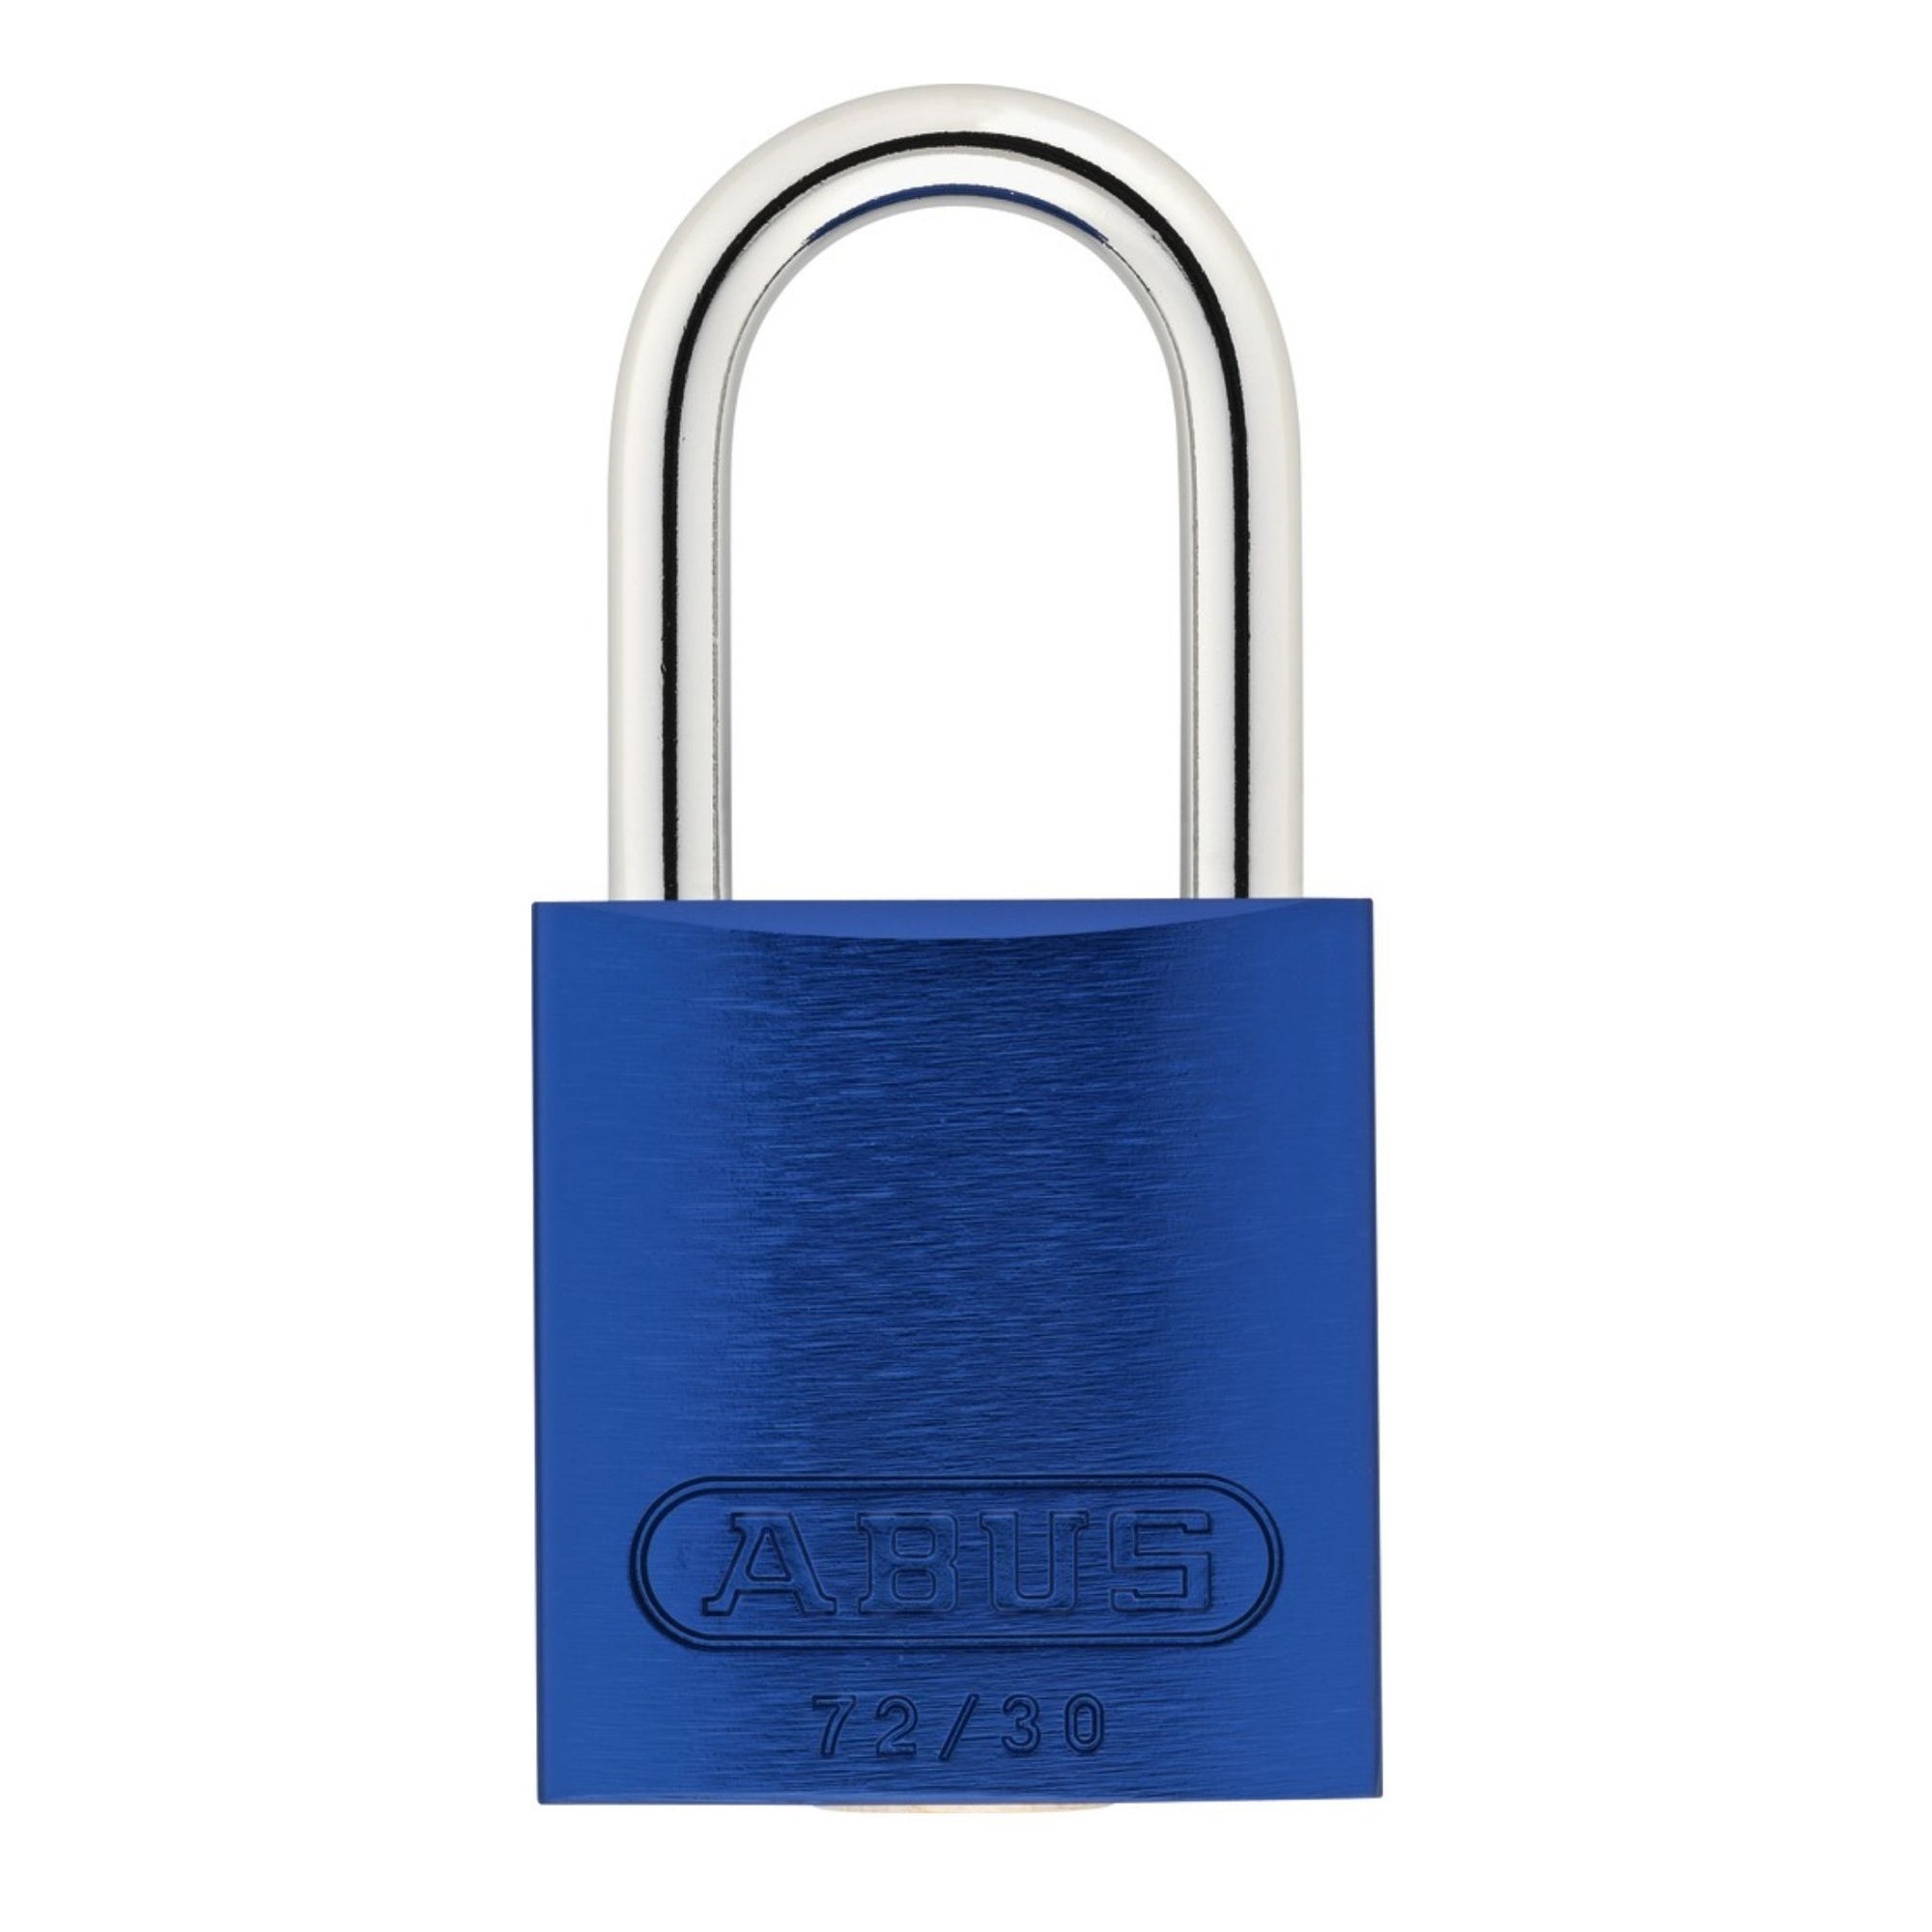 Abus 72/30 MK Blue Aluminum Safety Padlock Master Keyed Locks - The Lock Source